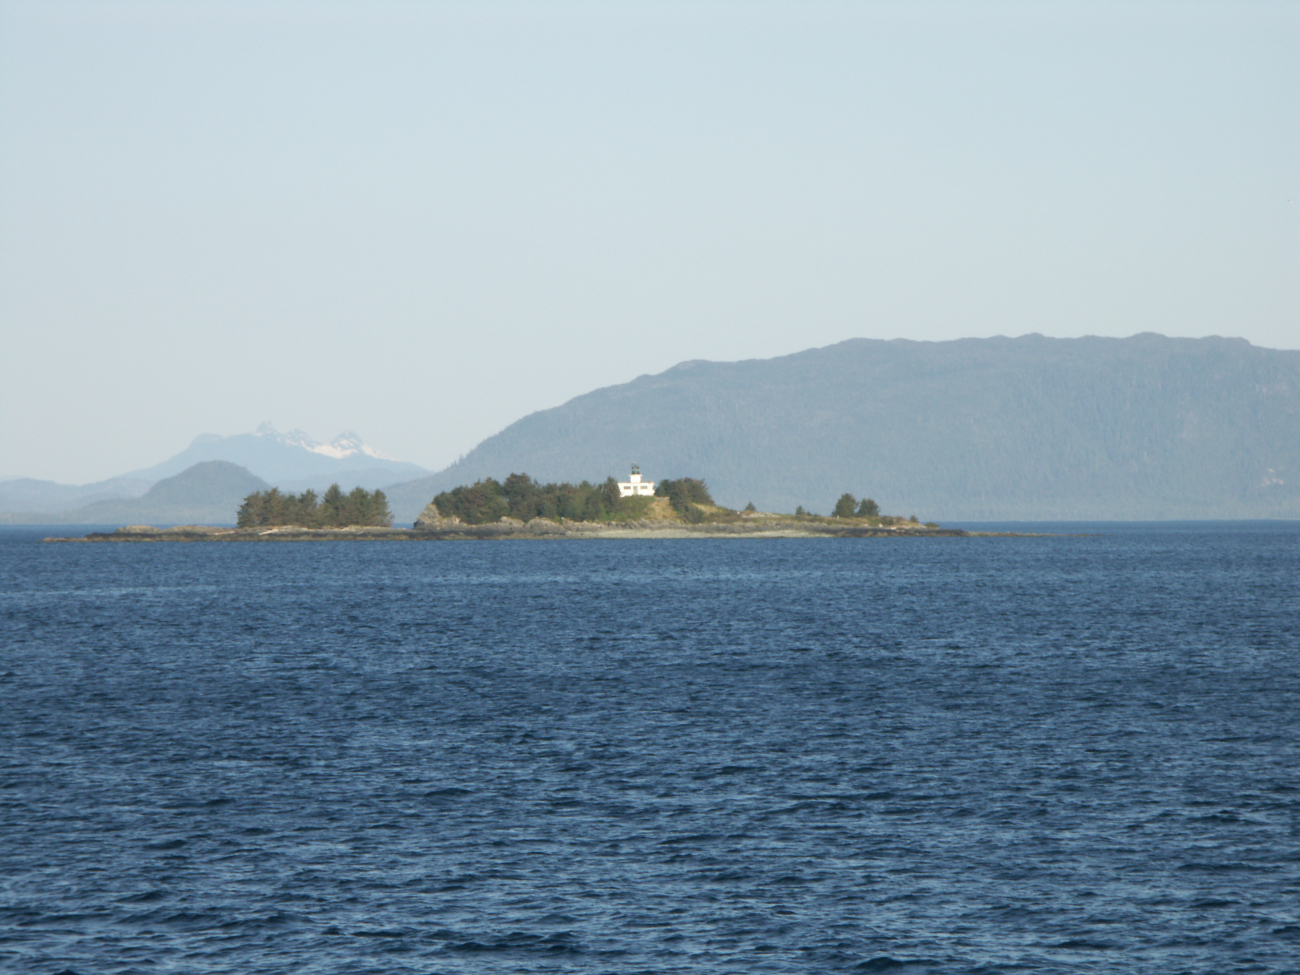 Guard Island Lighthouse